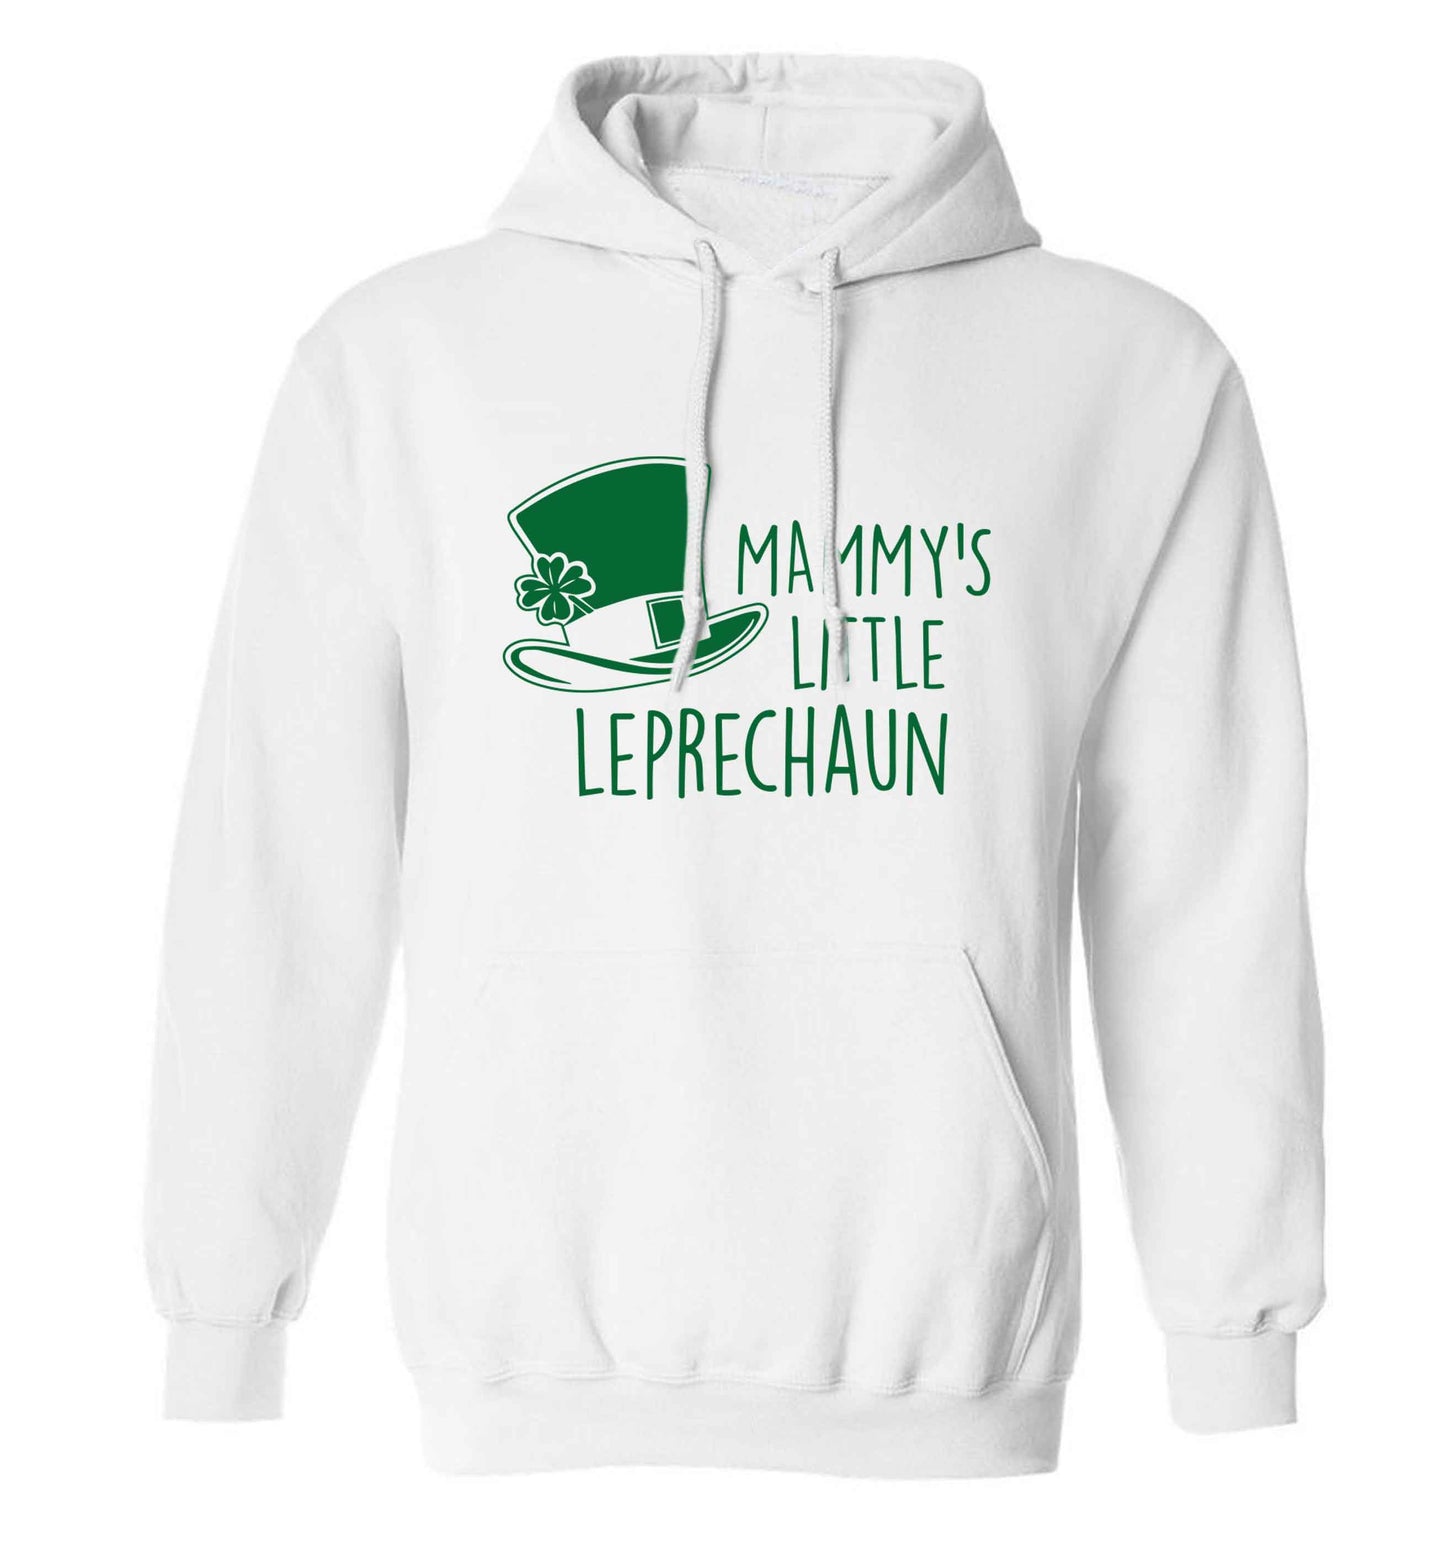 Mammy's little leprechaun adults unisex white hoodie 2XL